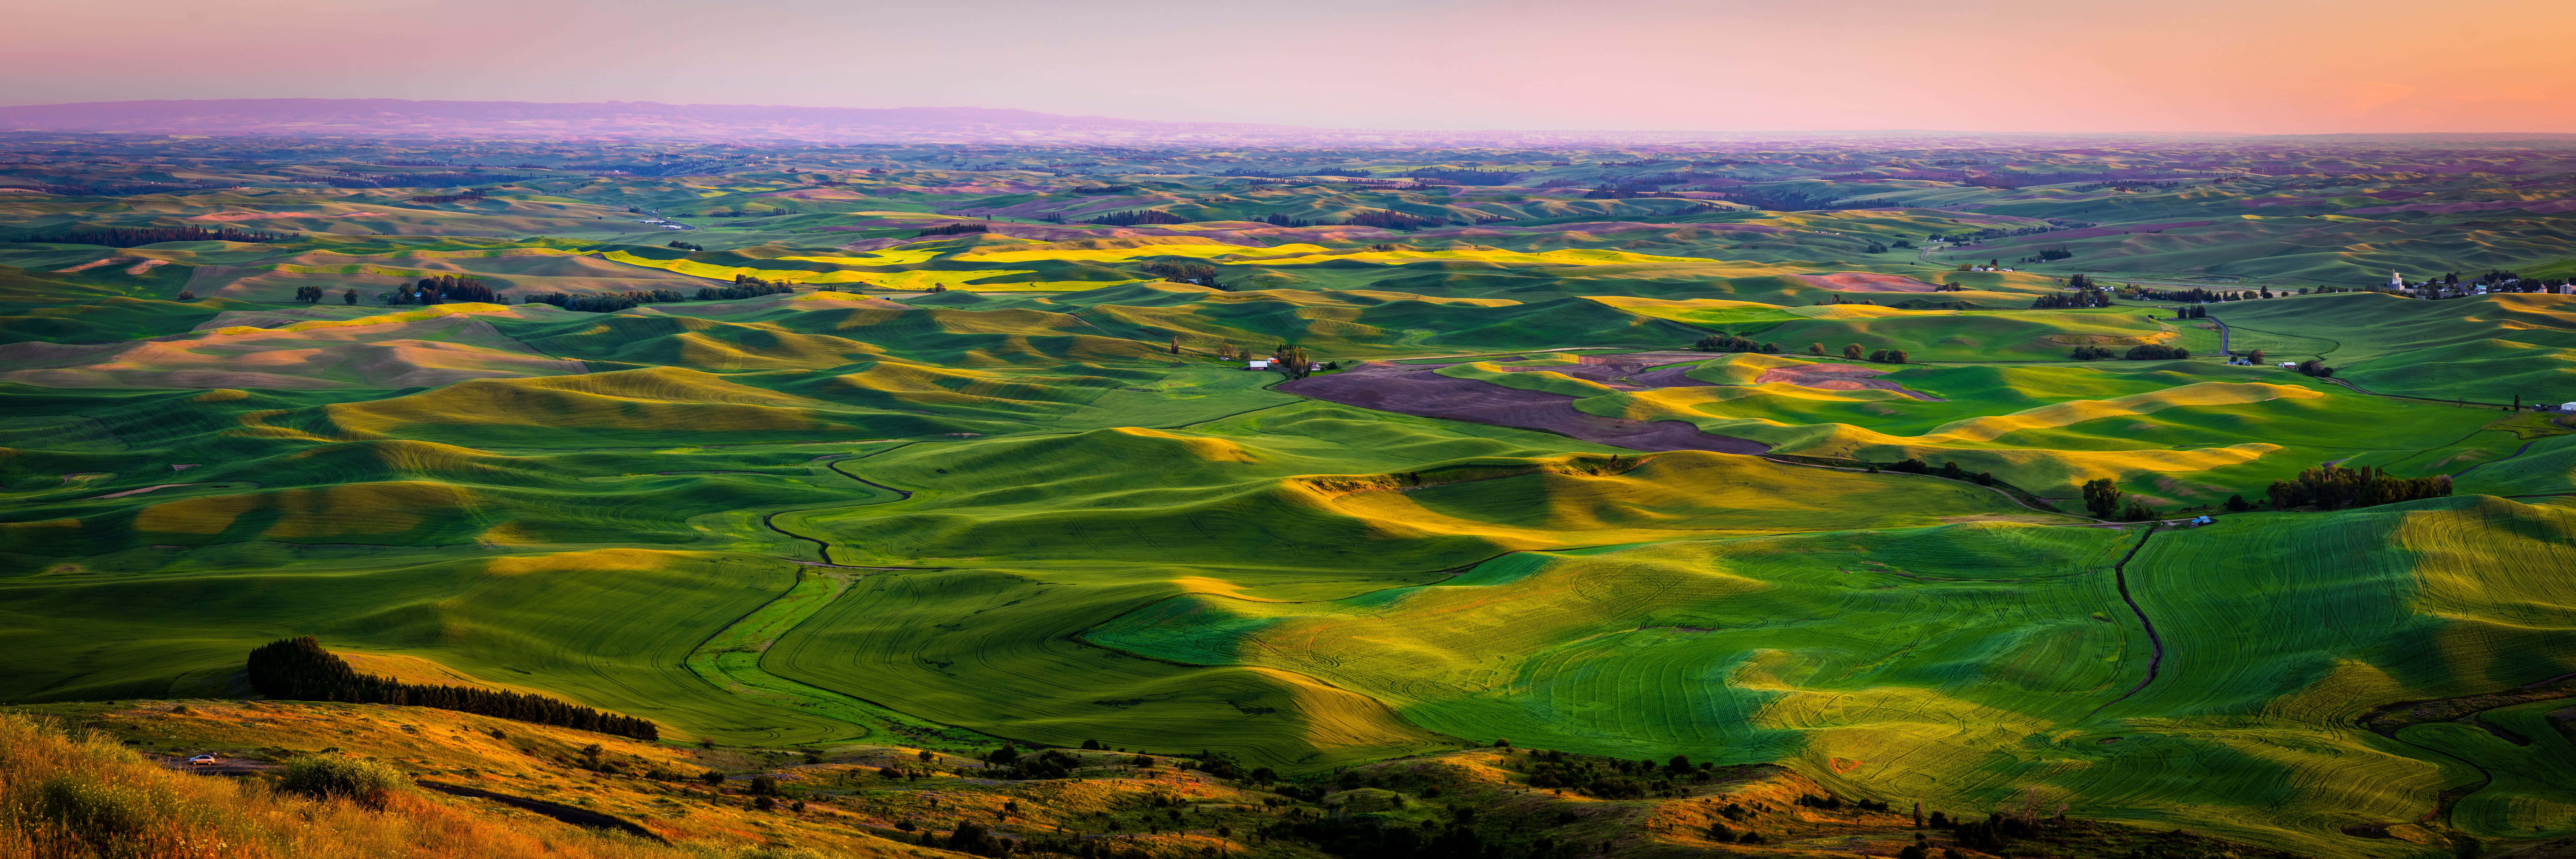 Green Hills And Valleys As A Panoramic Desktop Wallpaper